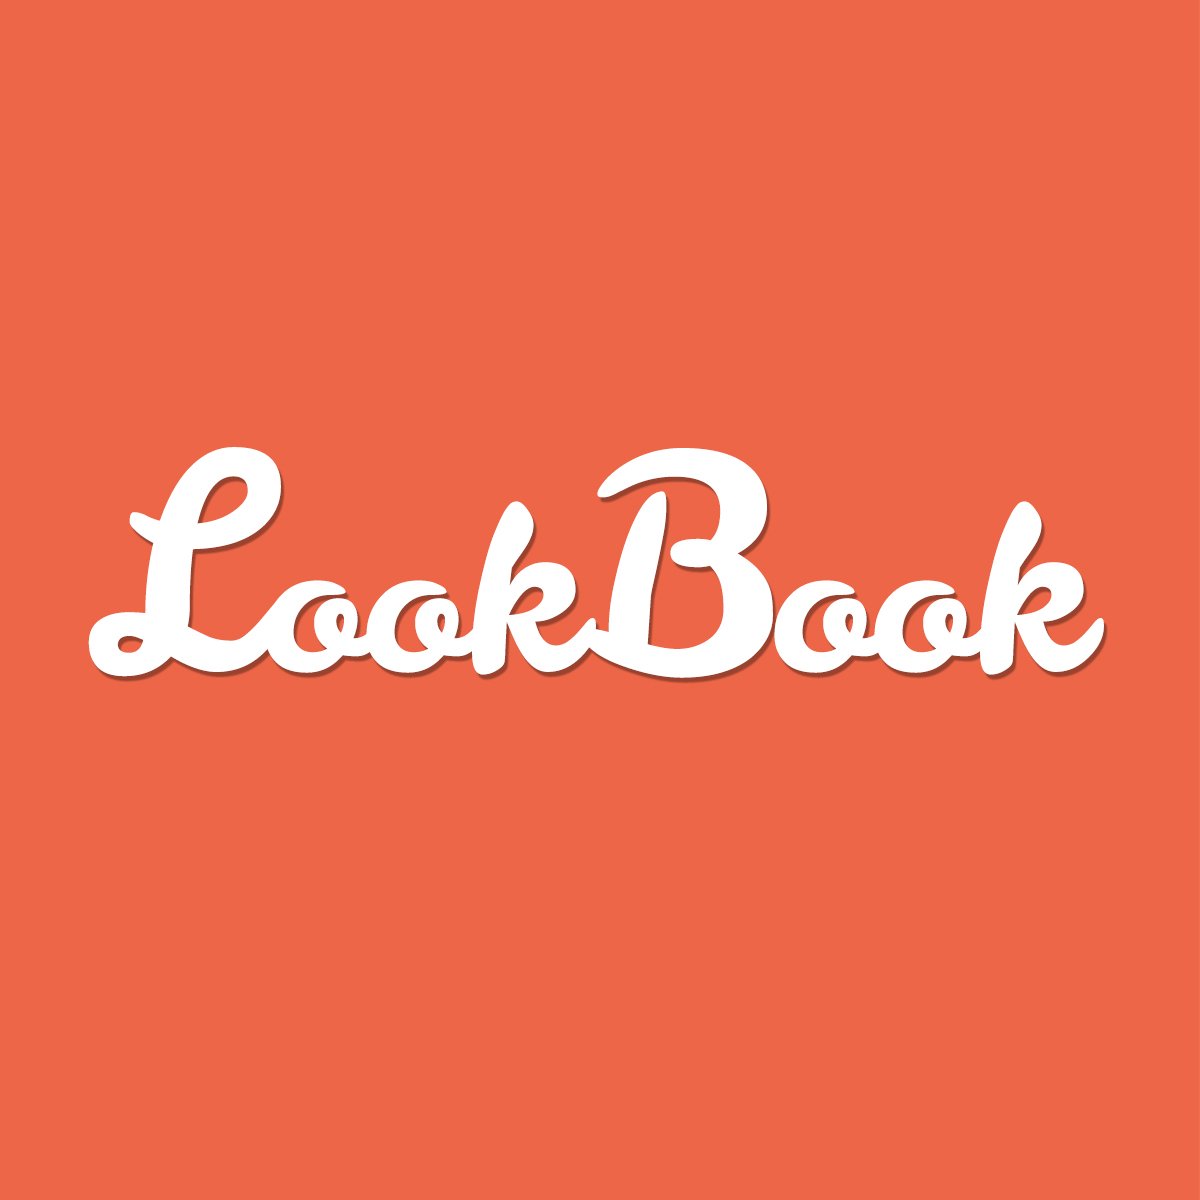 Shopify Lookbook Apps by Mod media